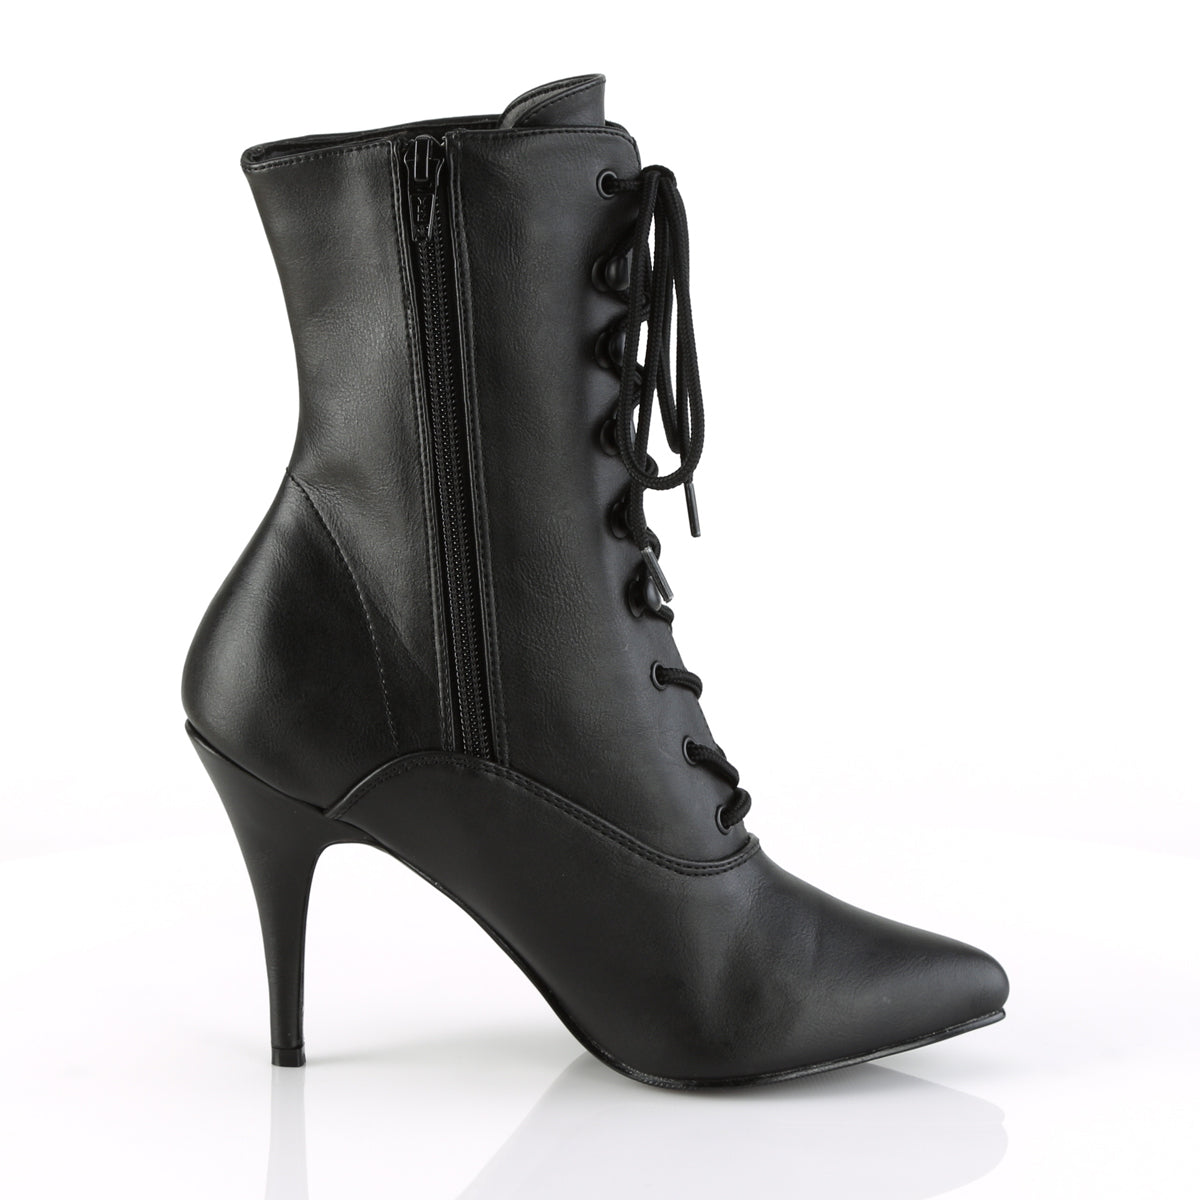 VANITY-1020 Pleaser Ankle Boots 4" Heel Black Fetish Shoes-Pleaser- Sexy Shoes Fetish Heels